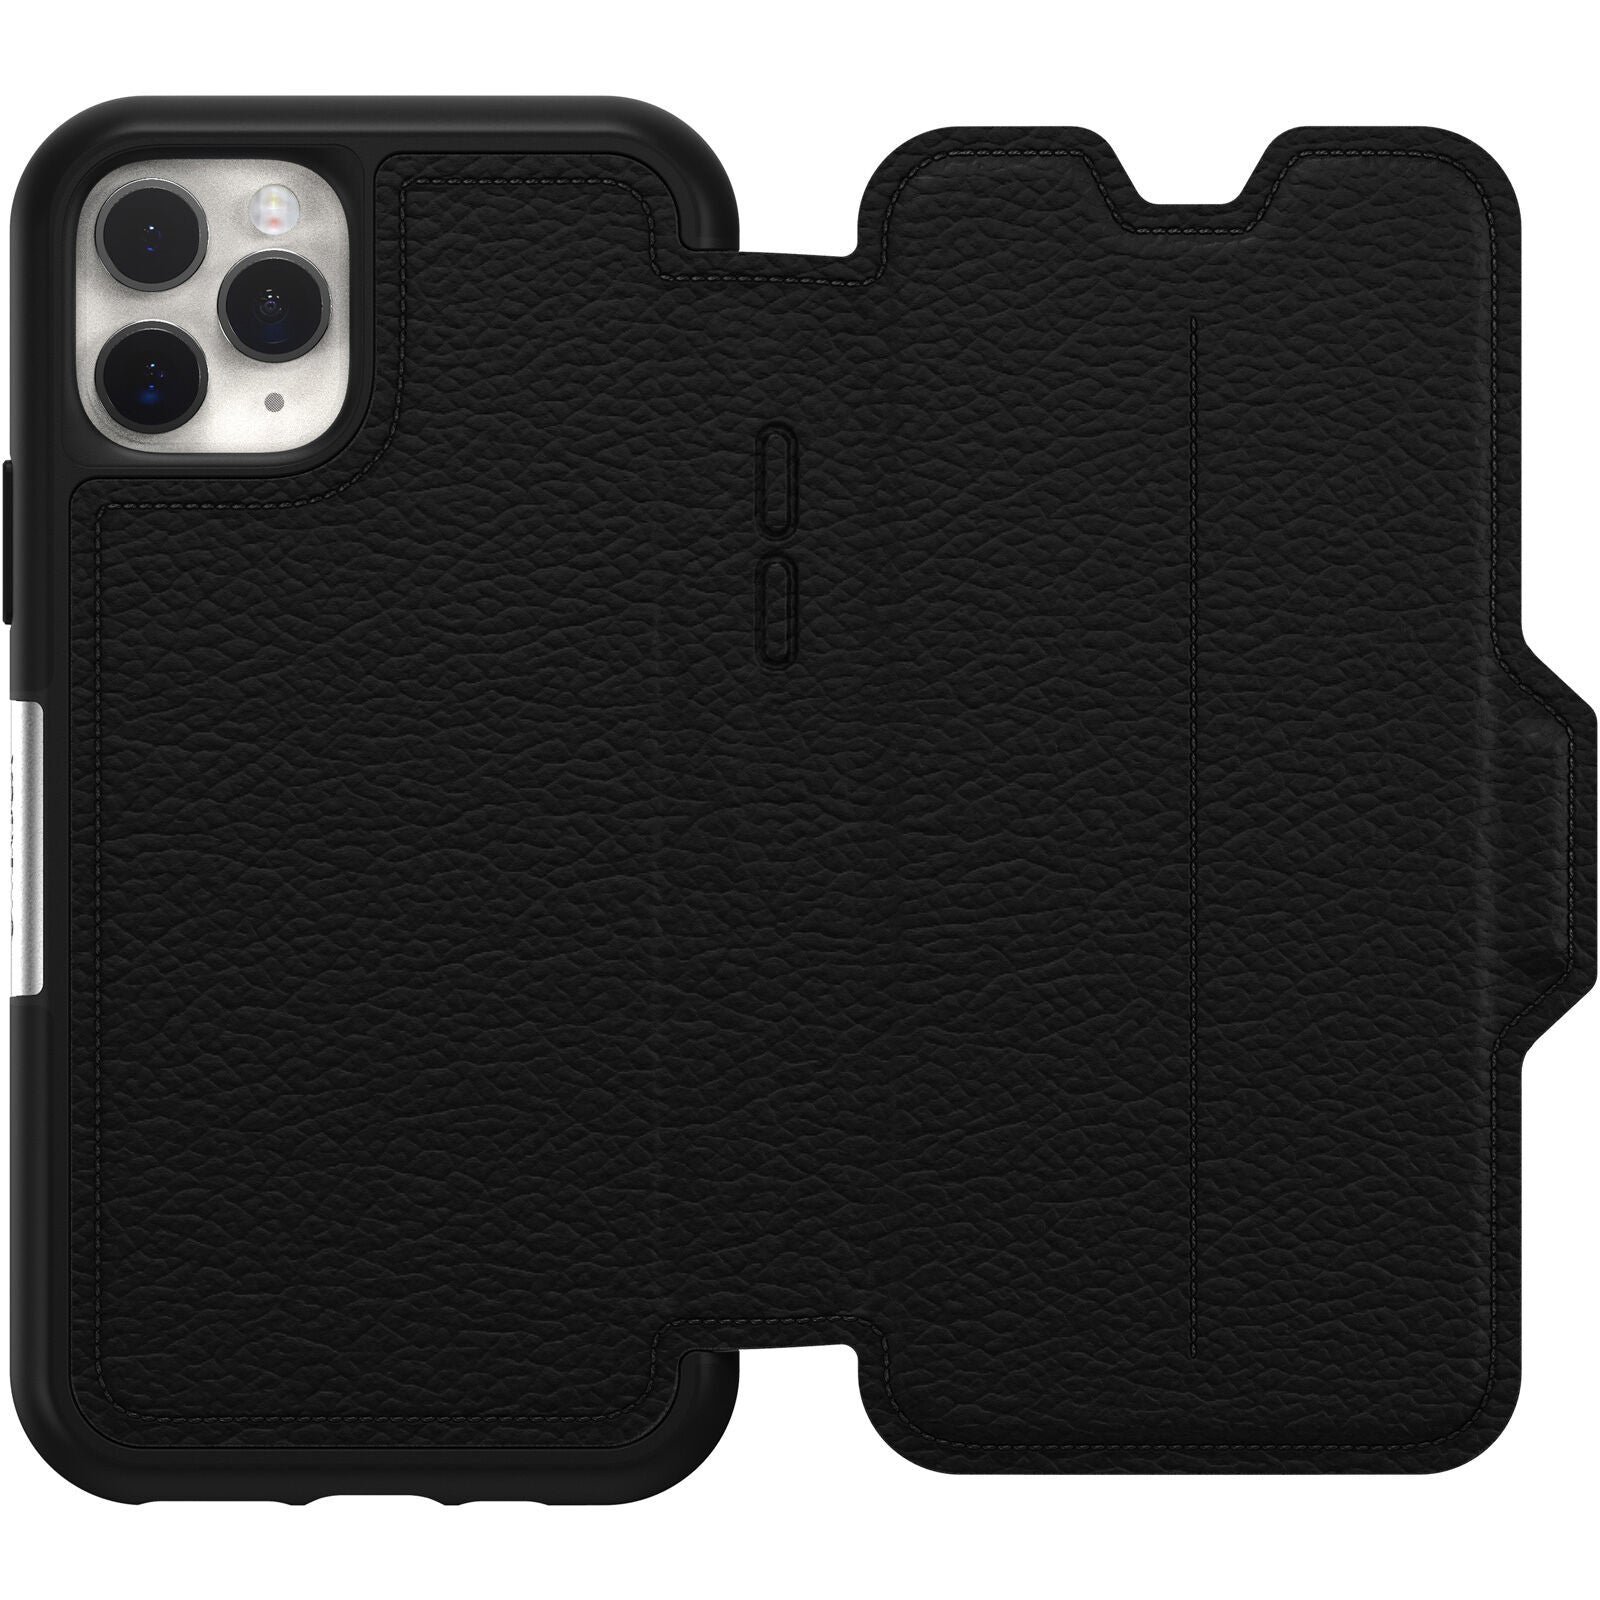 Otterbox Strada Case for iPhone 11 Pro - Black